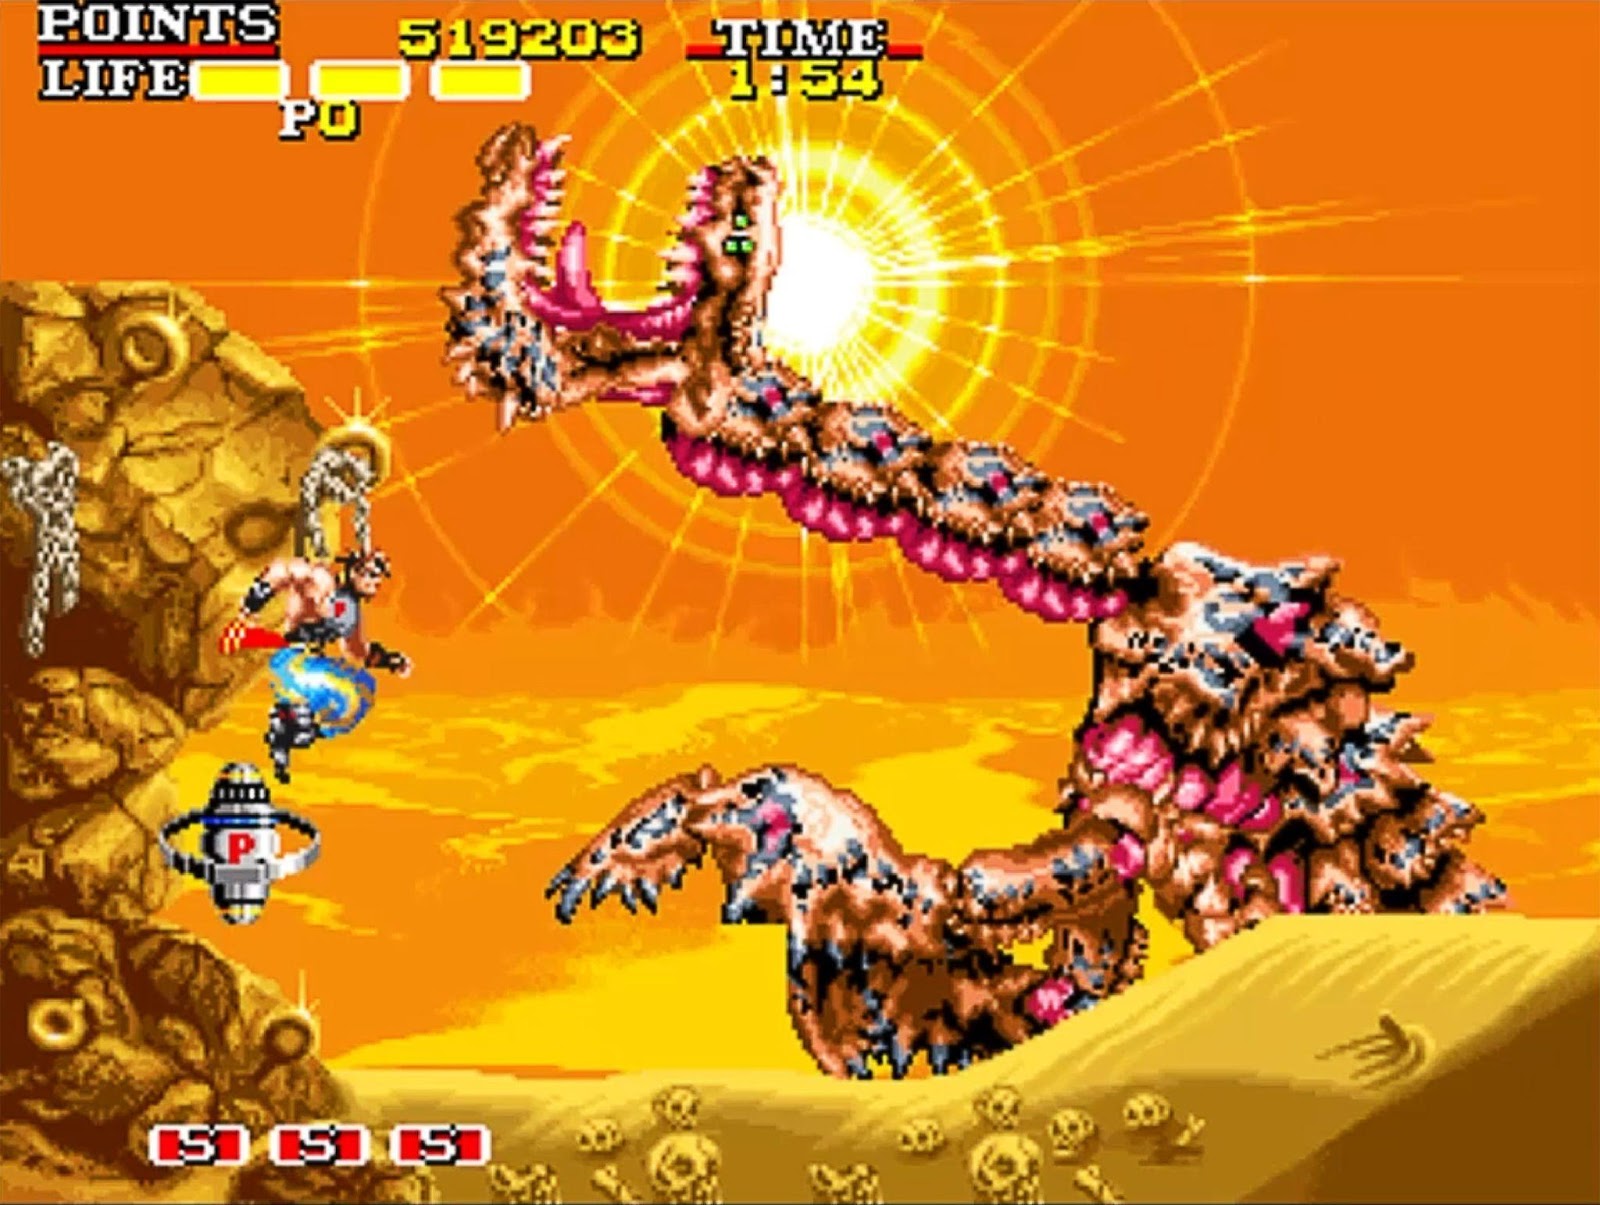 Hero in the desert level fighting a giant skeletal serpent.